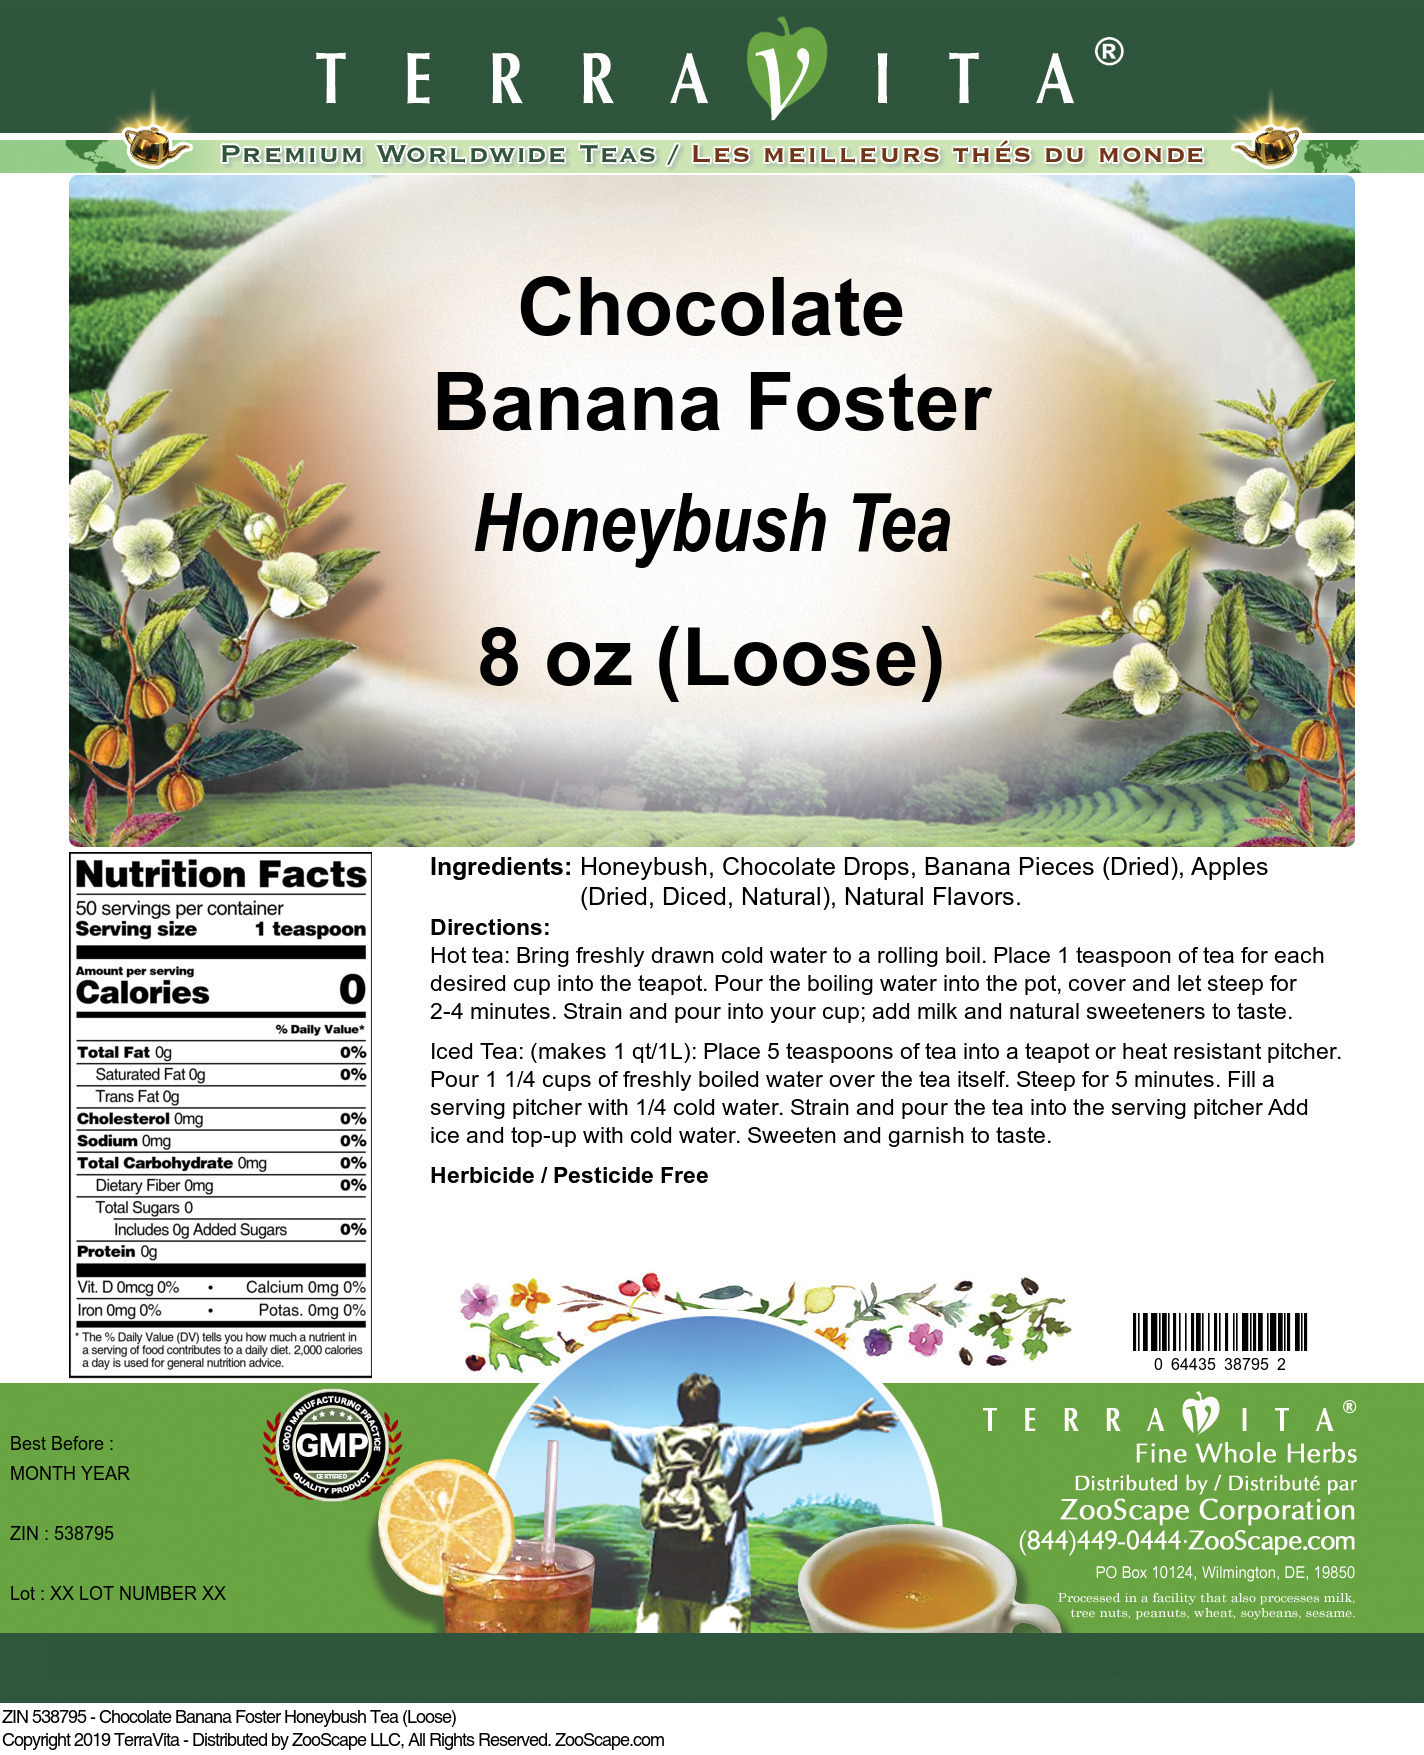 Chocolate Banana Foster Honeybush Tea (Loose) - Label